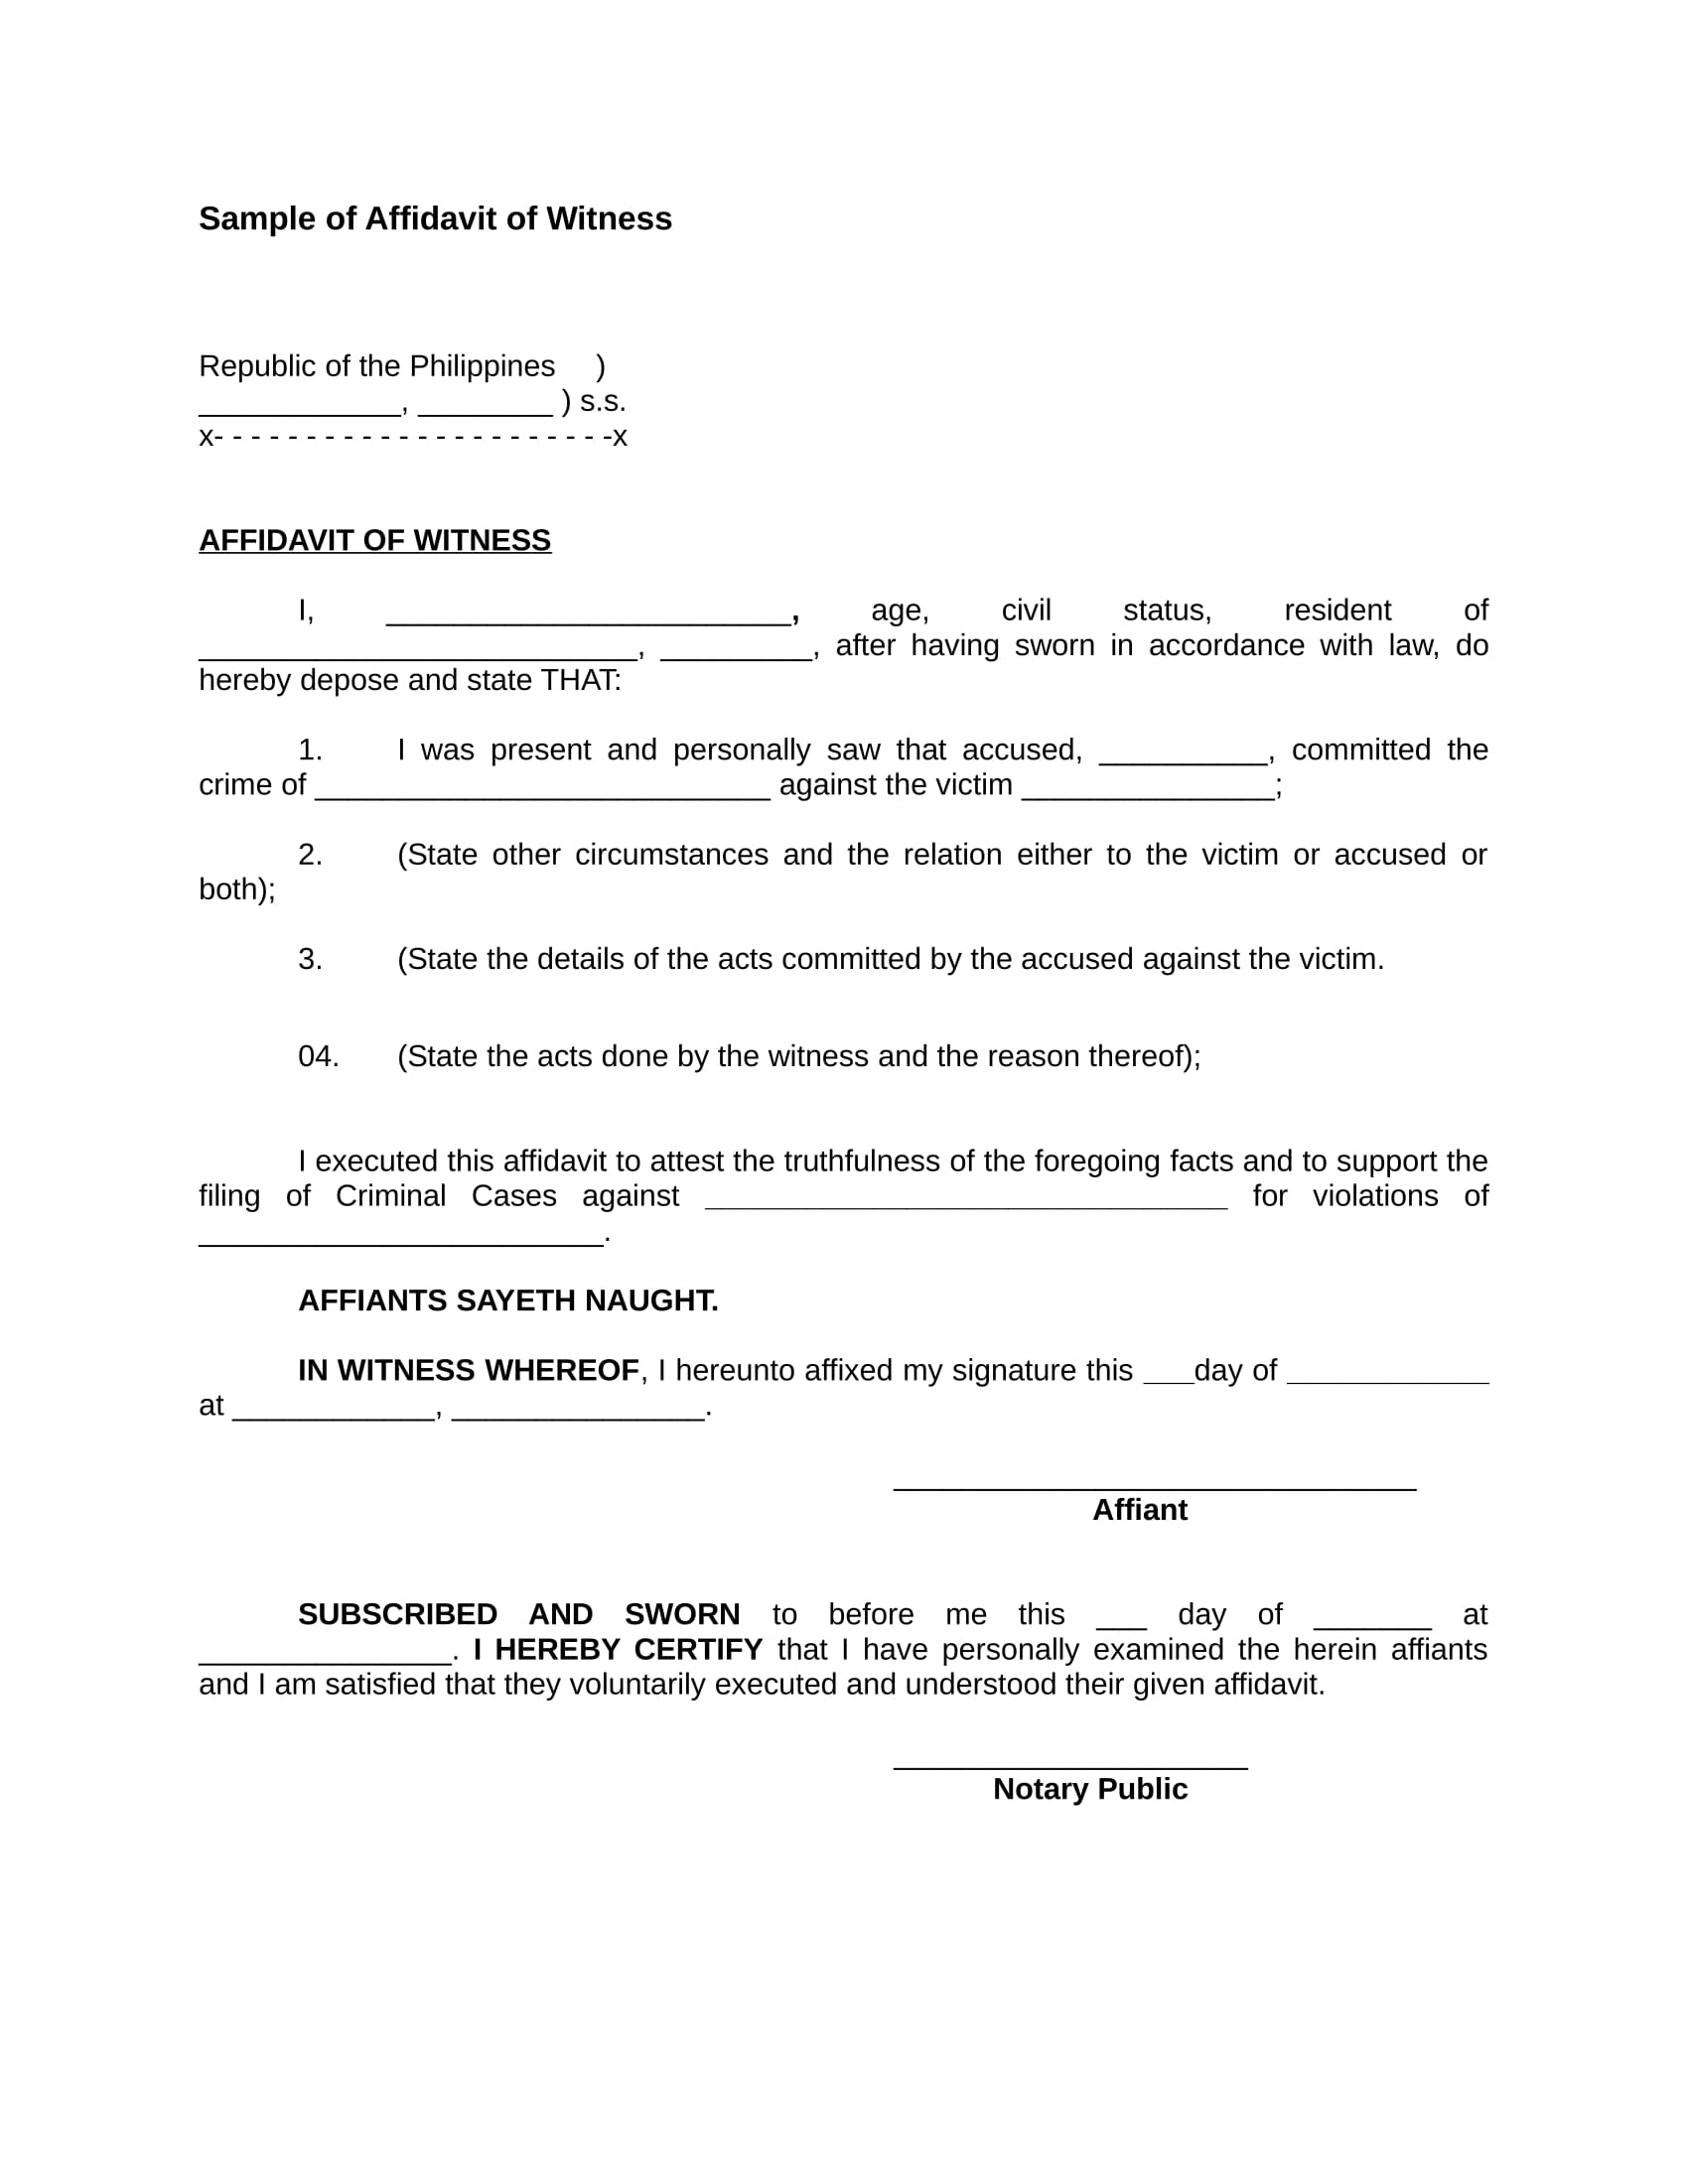 affidavit of witness form sample 1